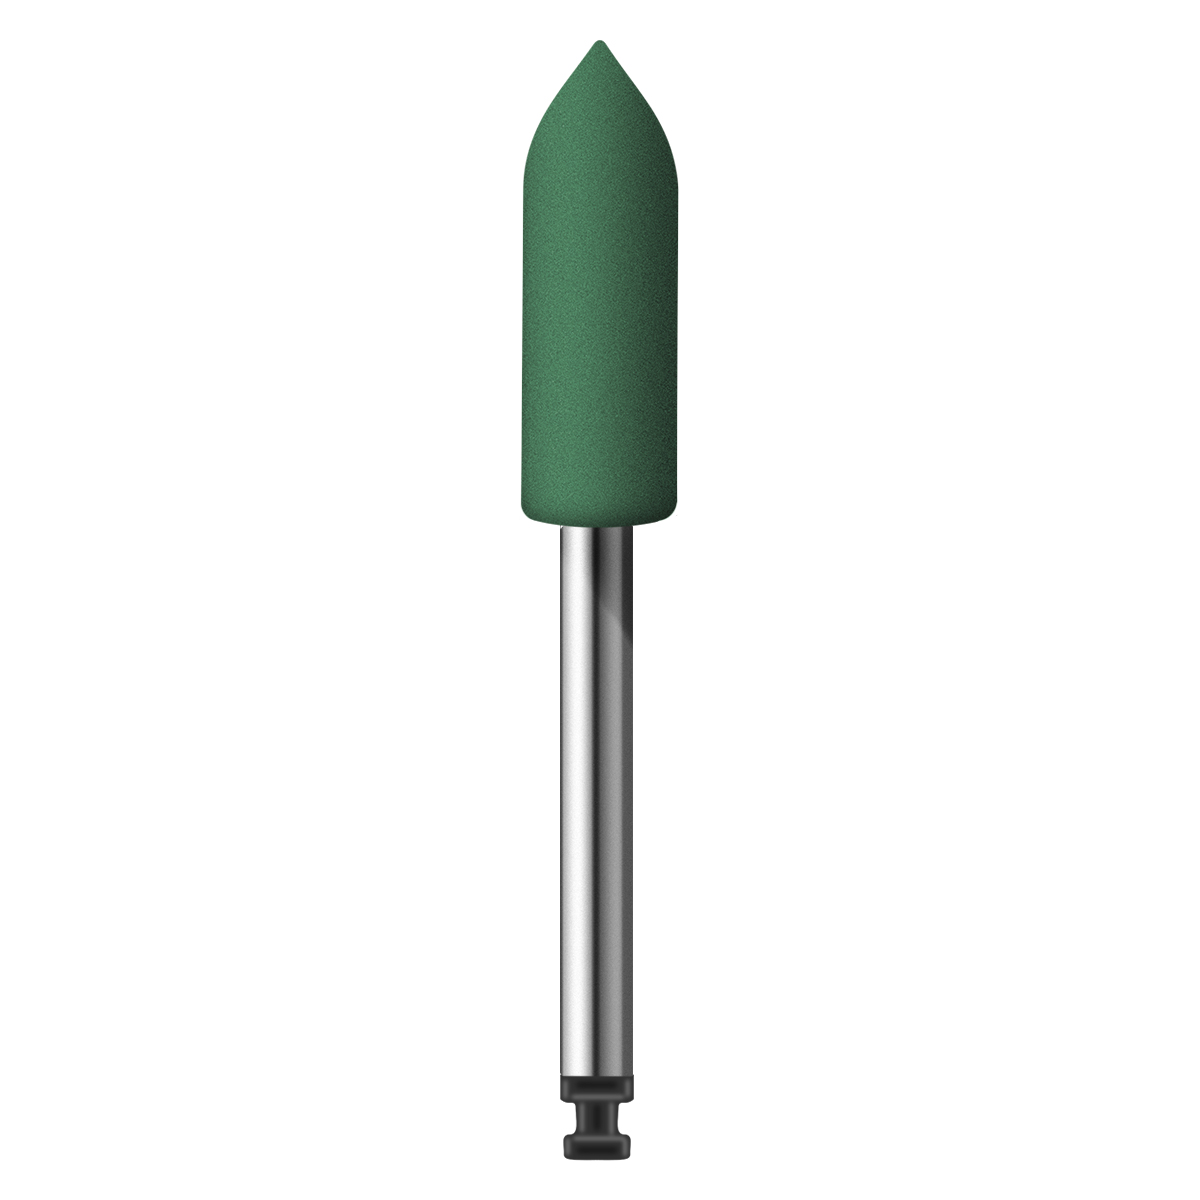 Polissoir Alphaflex 0131RA, vert, cylindre
pointu Ø 5 x 14 mm, lustrage